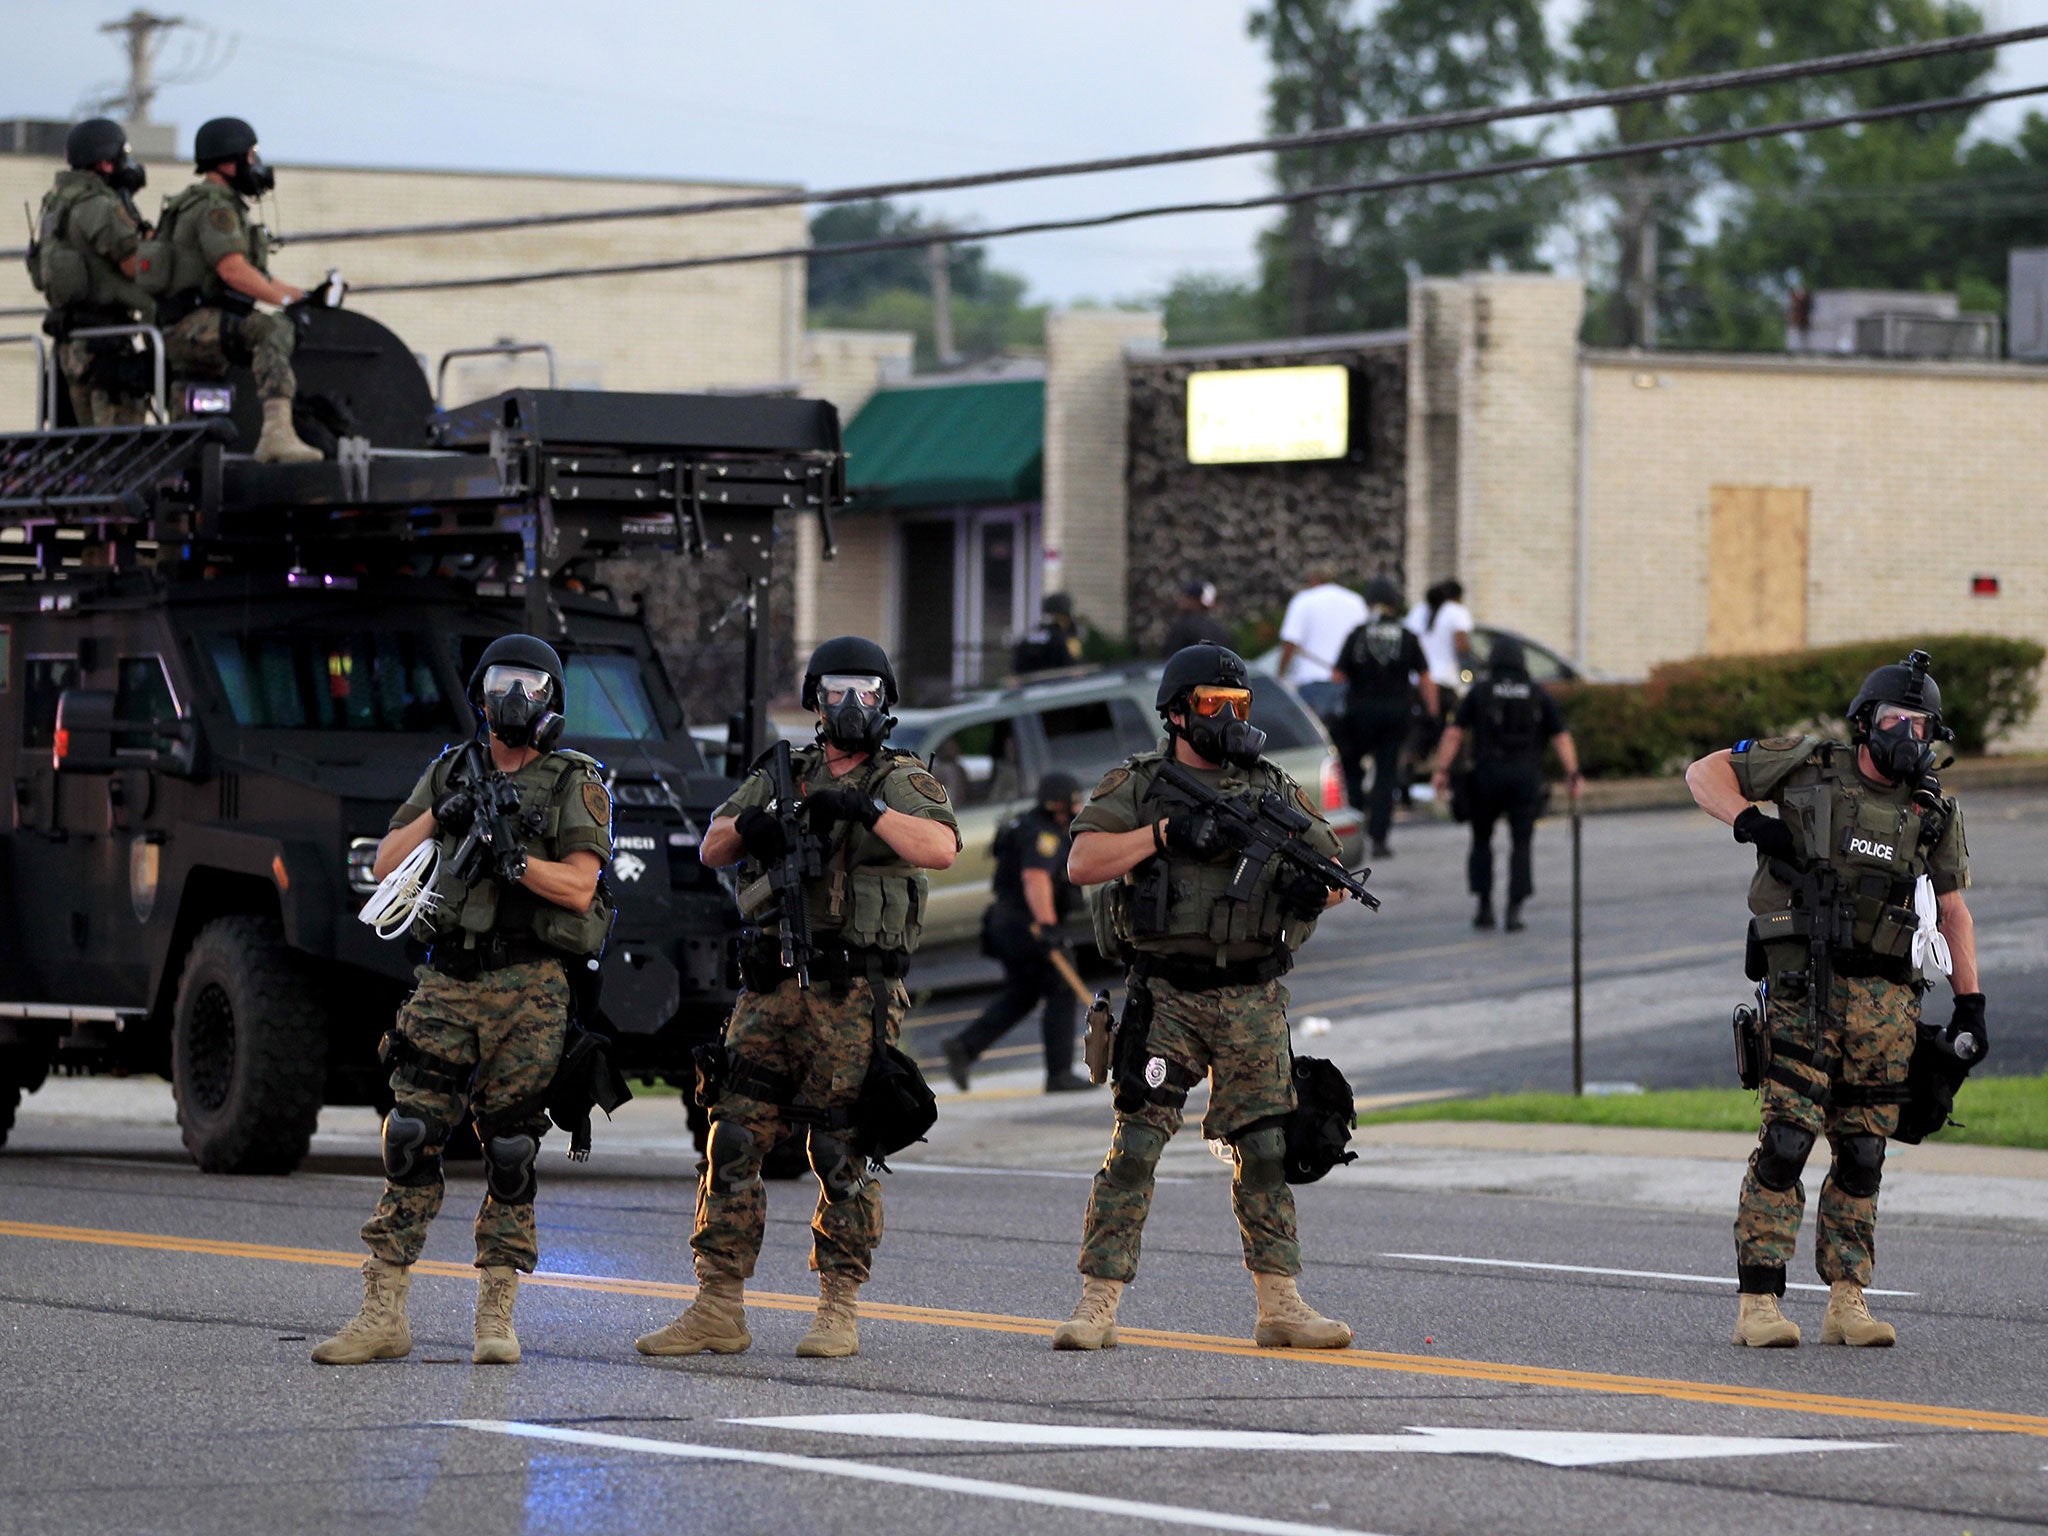 Police wearing riot gear try to disperse a crowd in Ferguson, Missouri